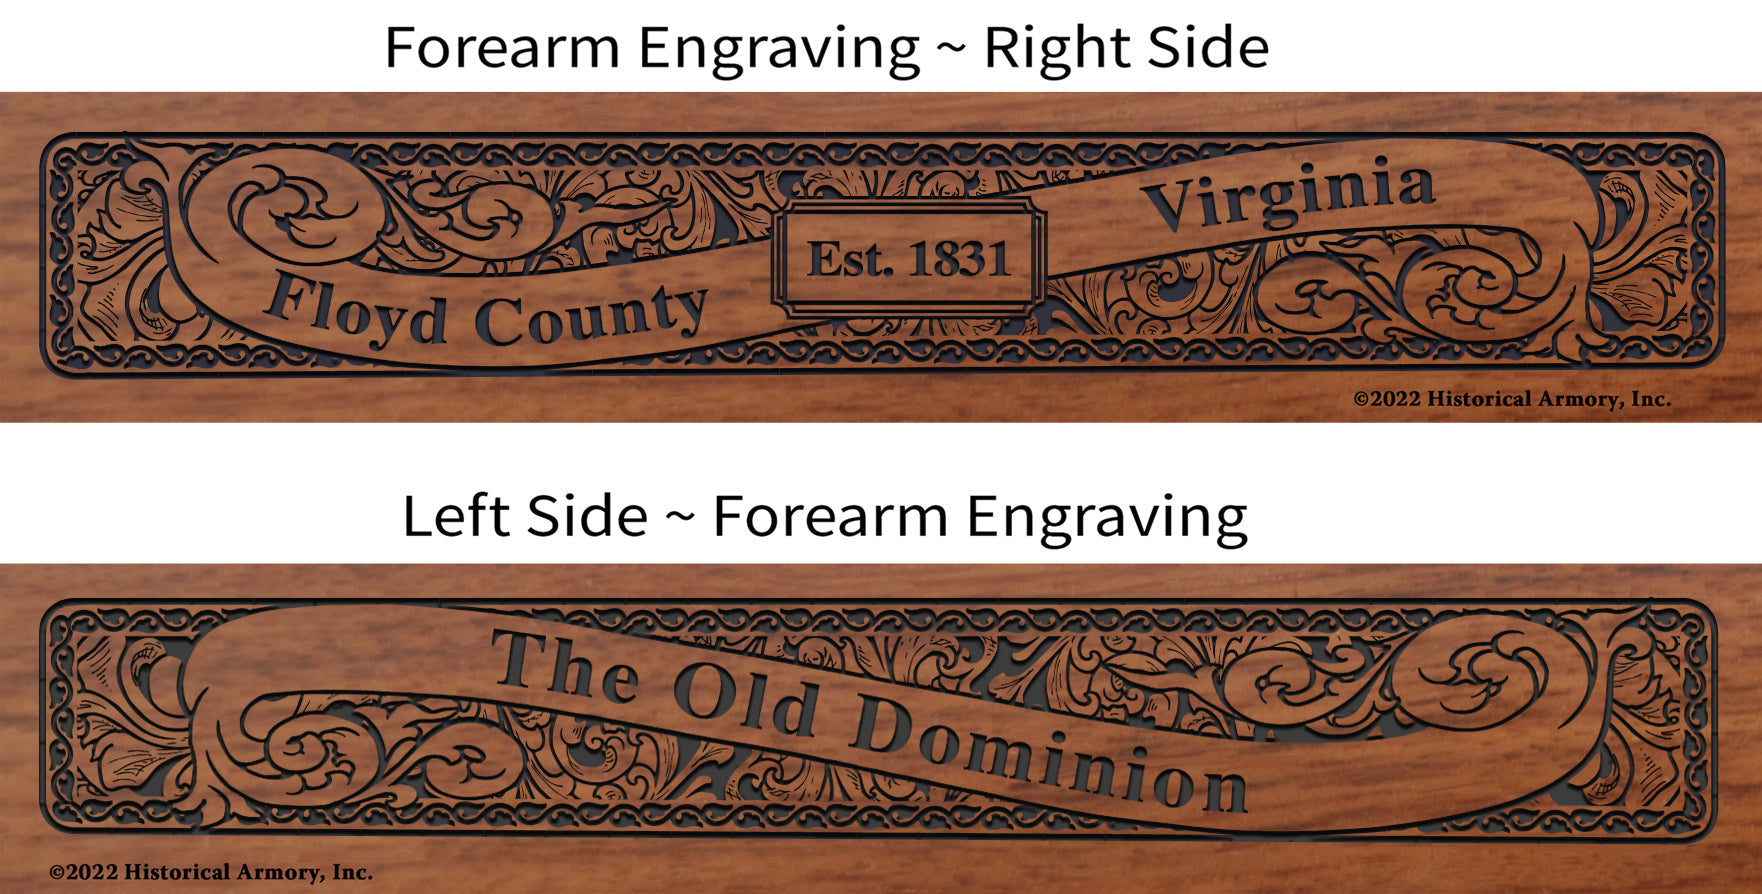 Floyd County Virginia Engraved Rifle Forearm